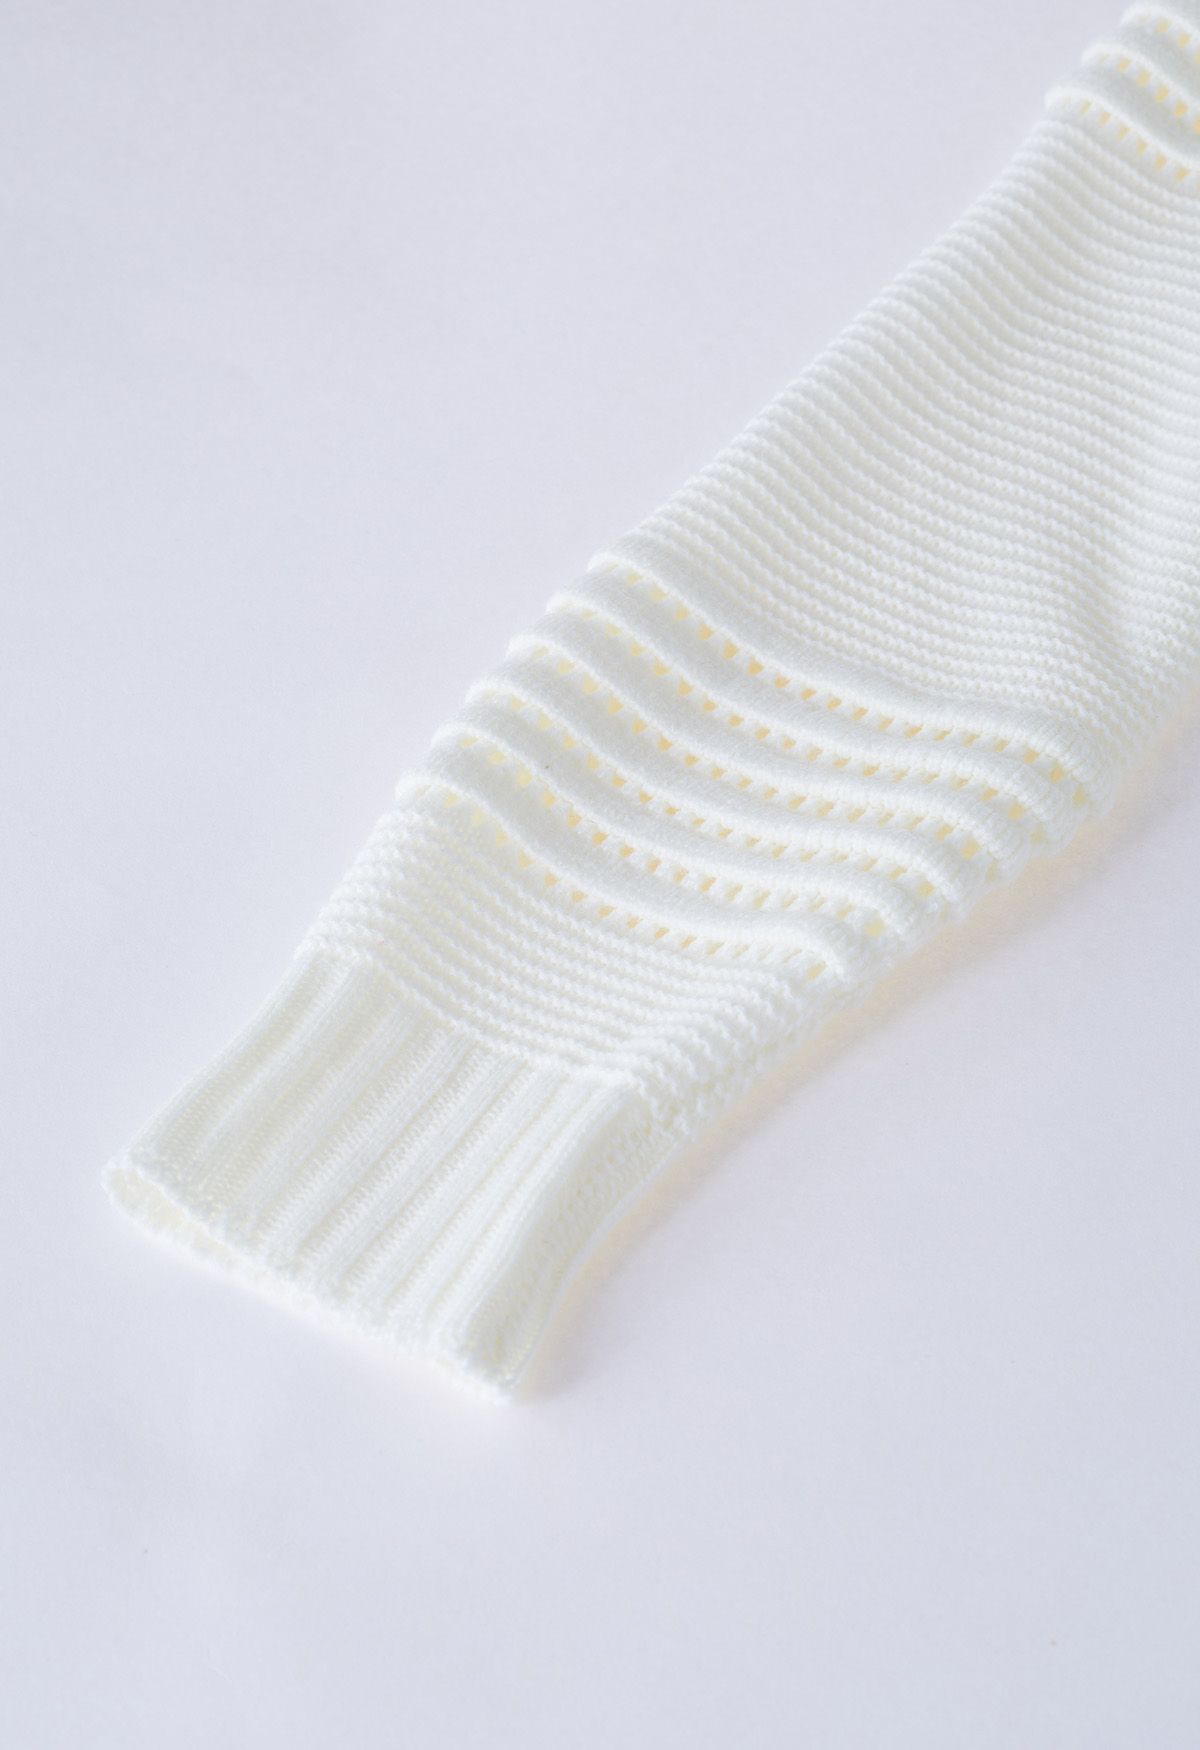 Stripe Embossed Openwork Knit Sweater in White